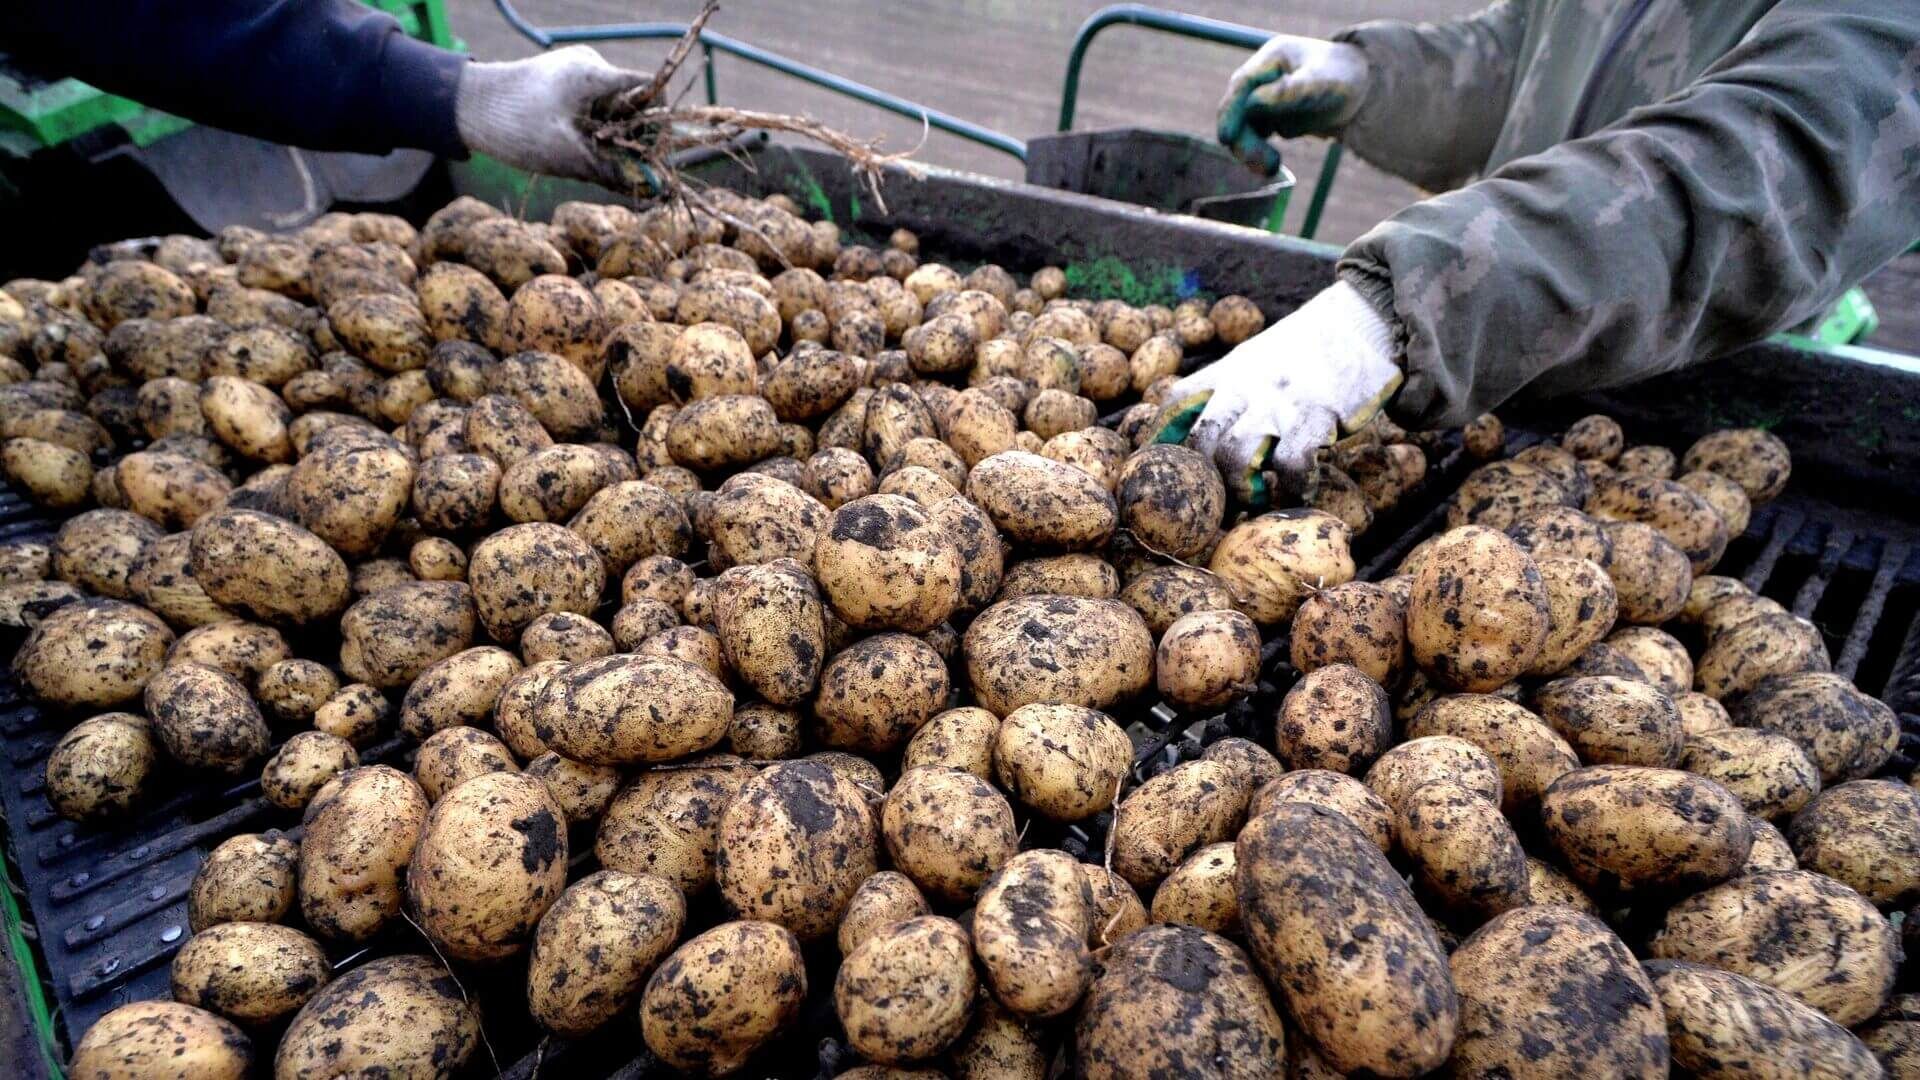 Выращивание картофеля в Молдове - AgroExpert.md